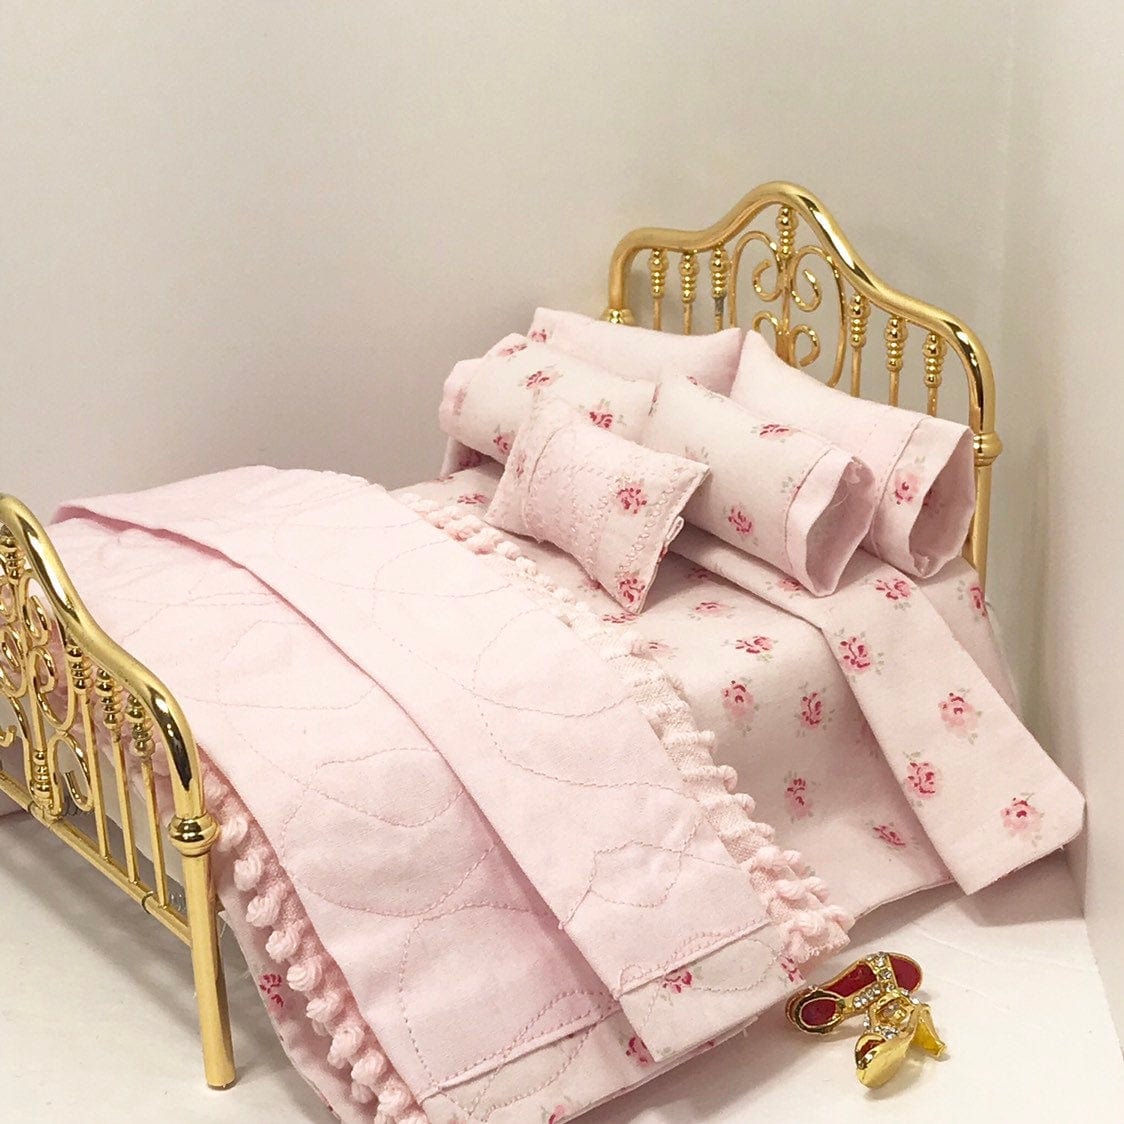 Chantallena Doll House Double Bedding Set Shabby Cottage -  Nine Piece Shabby Dark Pink Roses Cotton Bedding Set